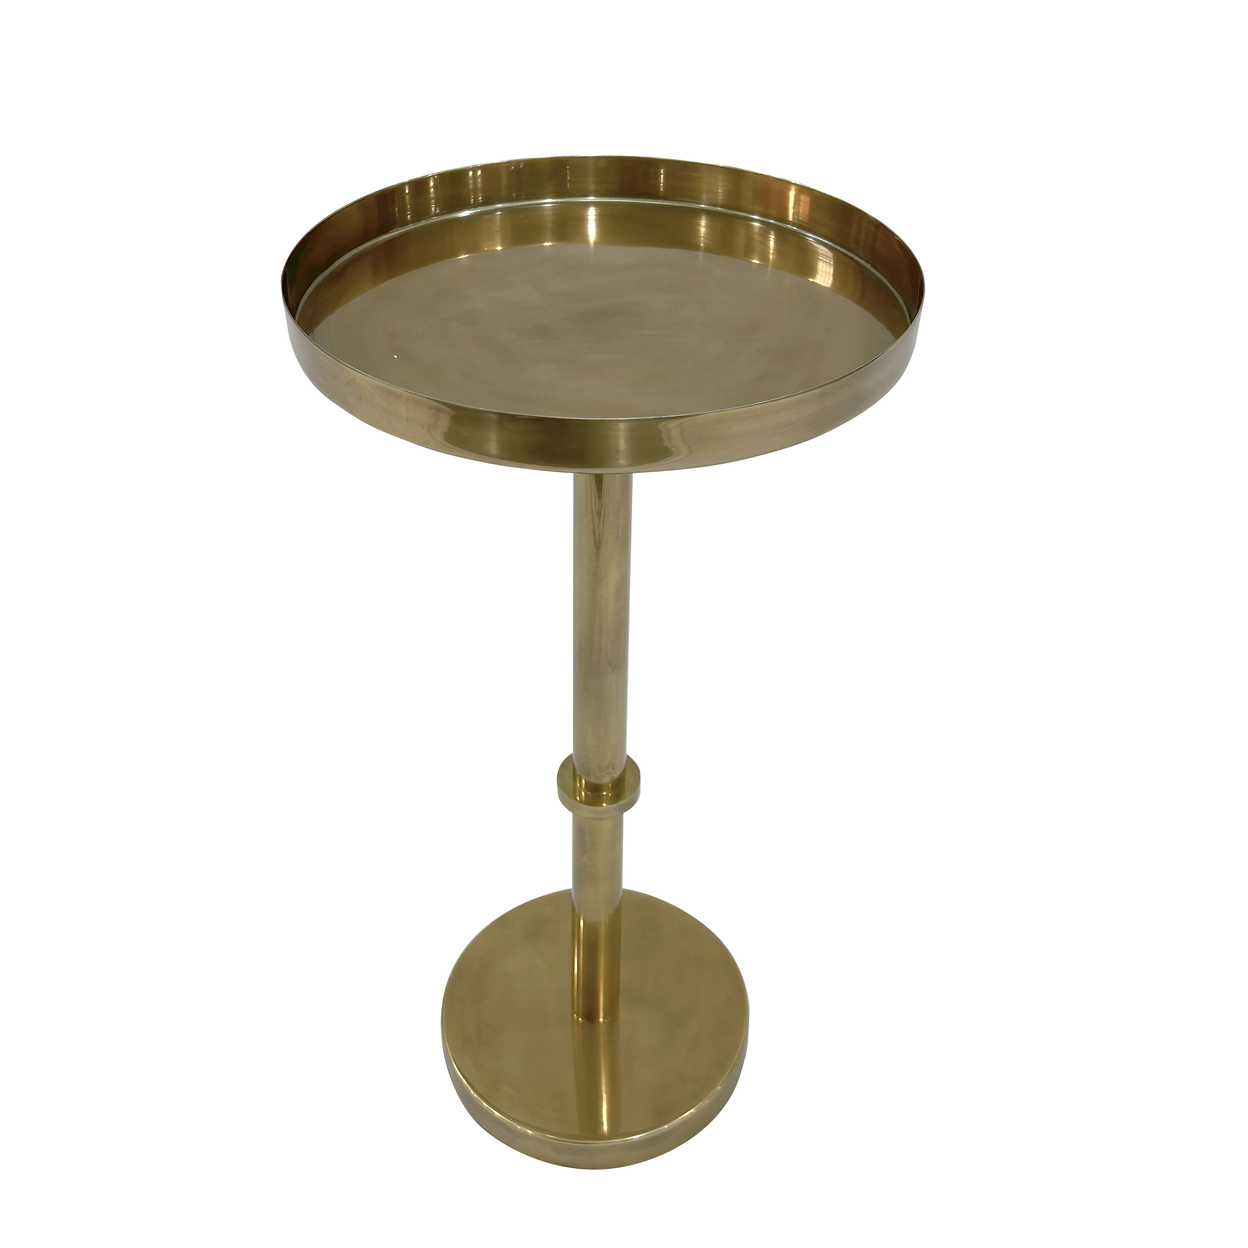 Ara 12 Inch Side End Table, Vintage Sleek Pillar Base, Round Tray Top, Oxidized Antique Brass - Saltoro Sherpi